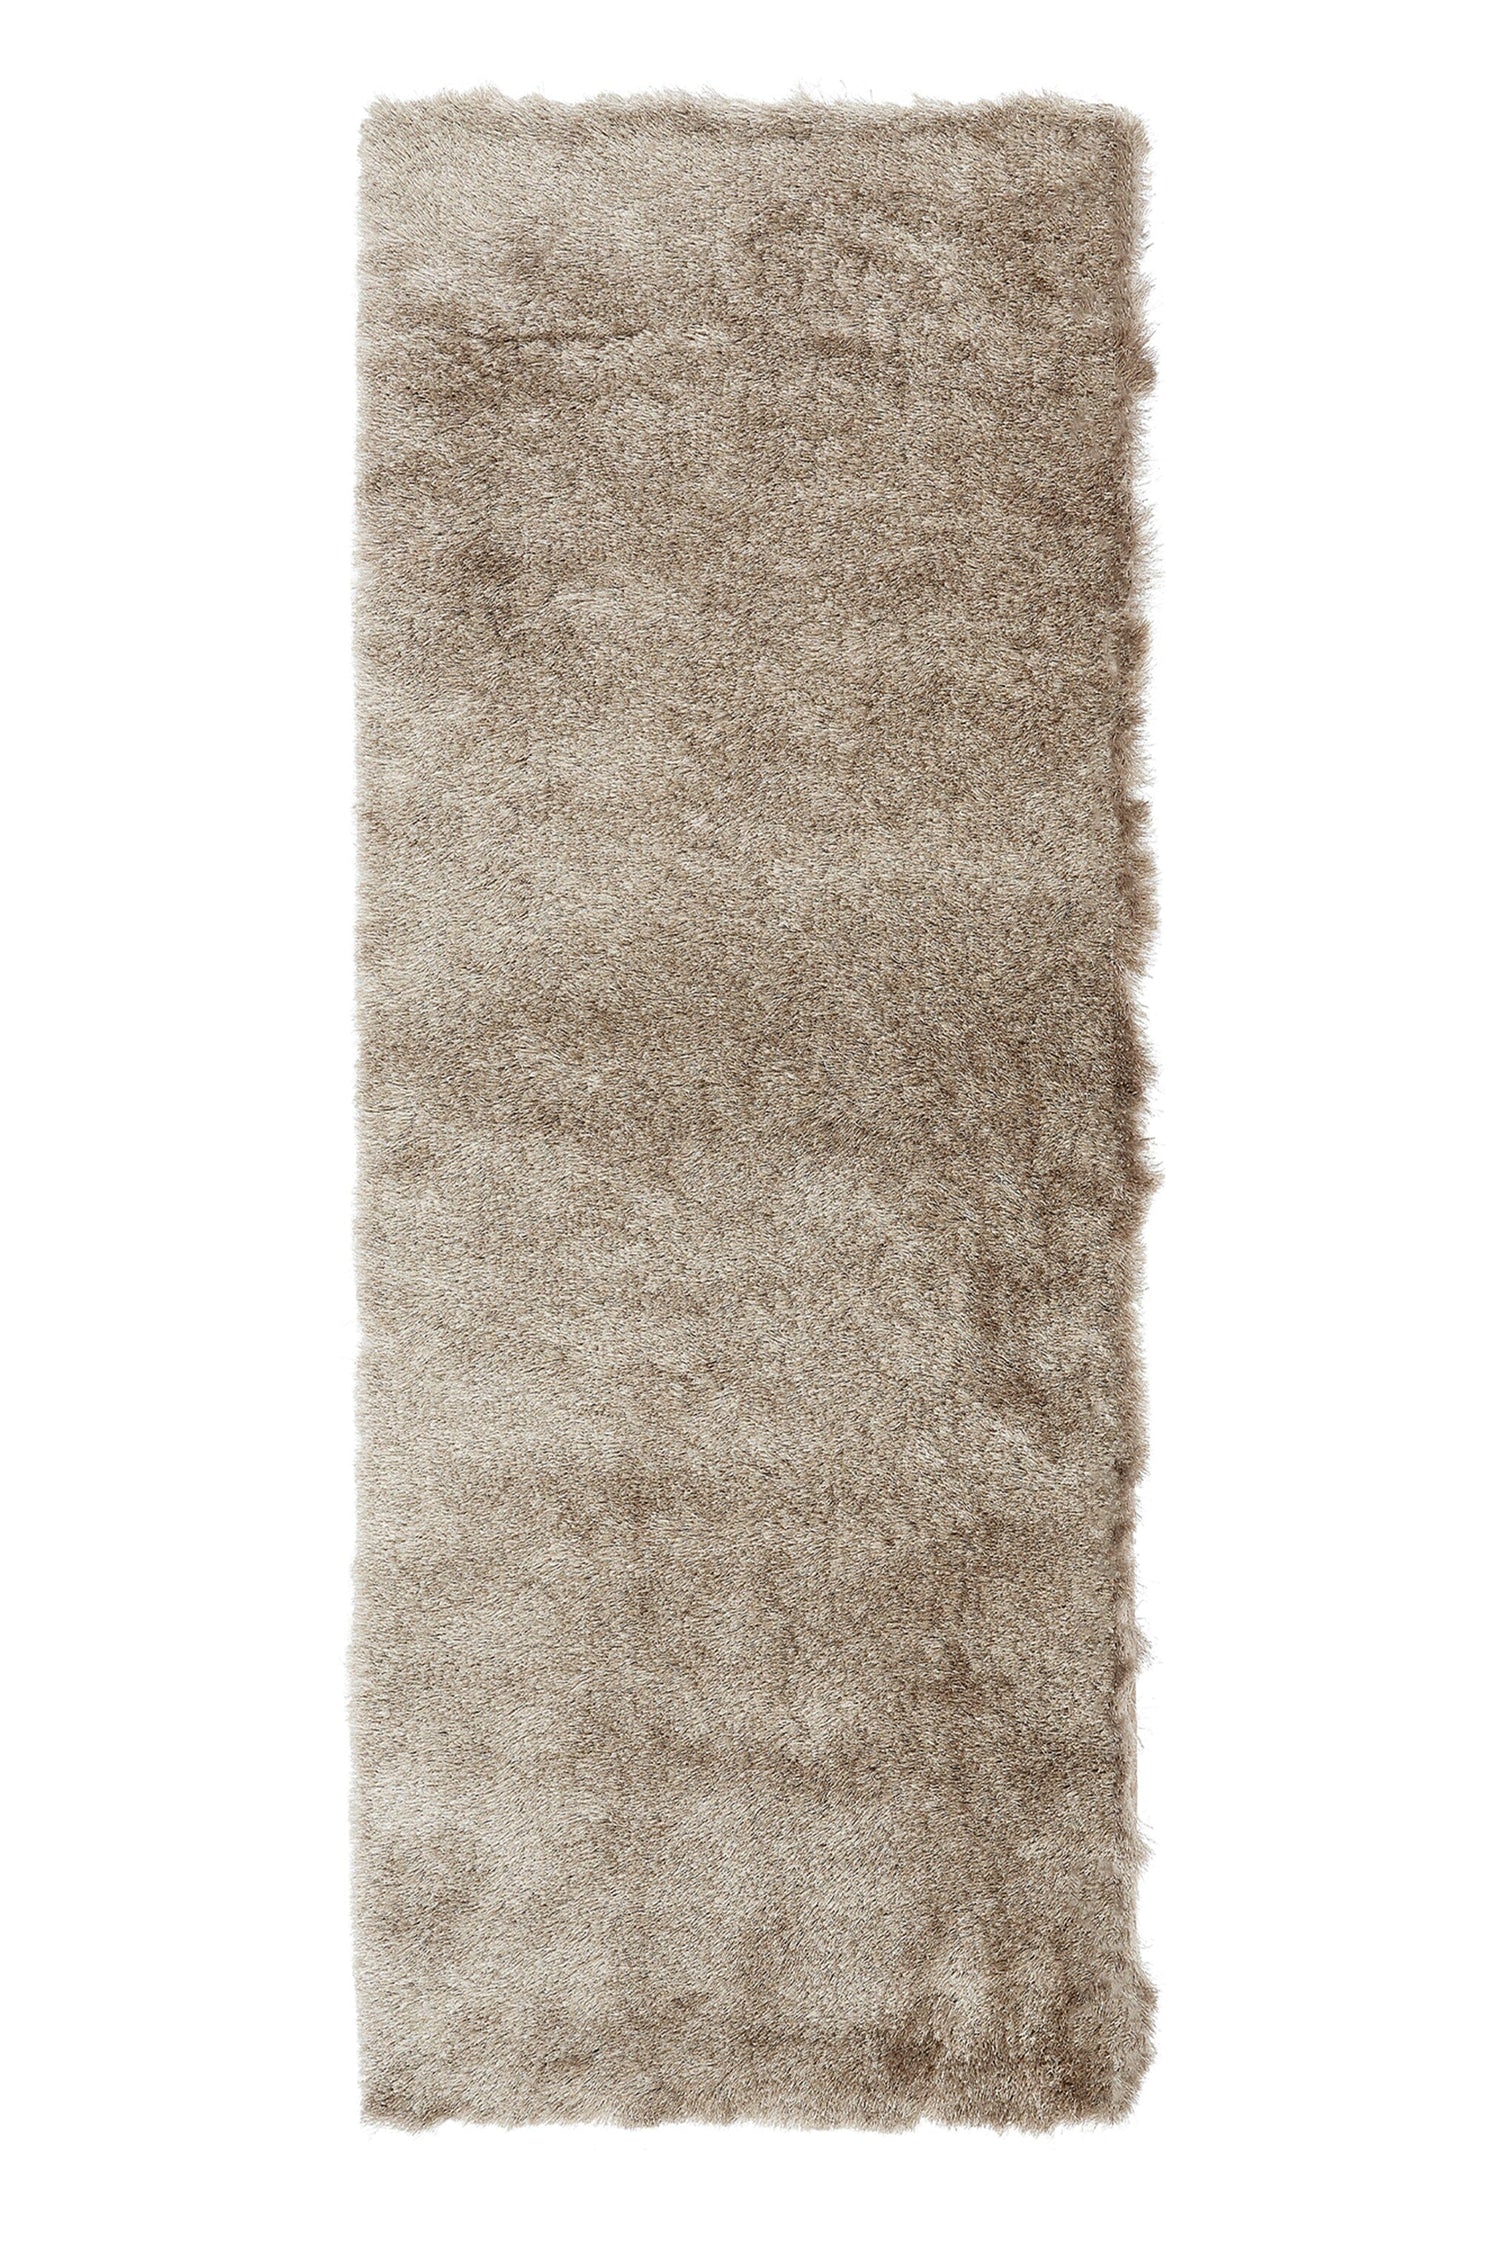  Asiatic Carpets-Asiatic Carpets Whisper Table Tufted Rug Mocha - 200 x 300cm-Beige, Natural 421 